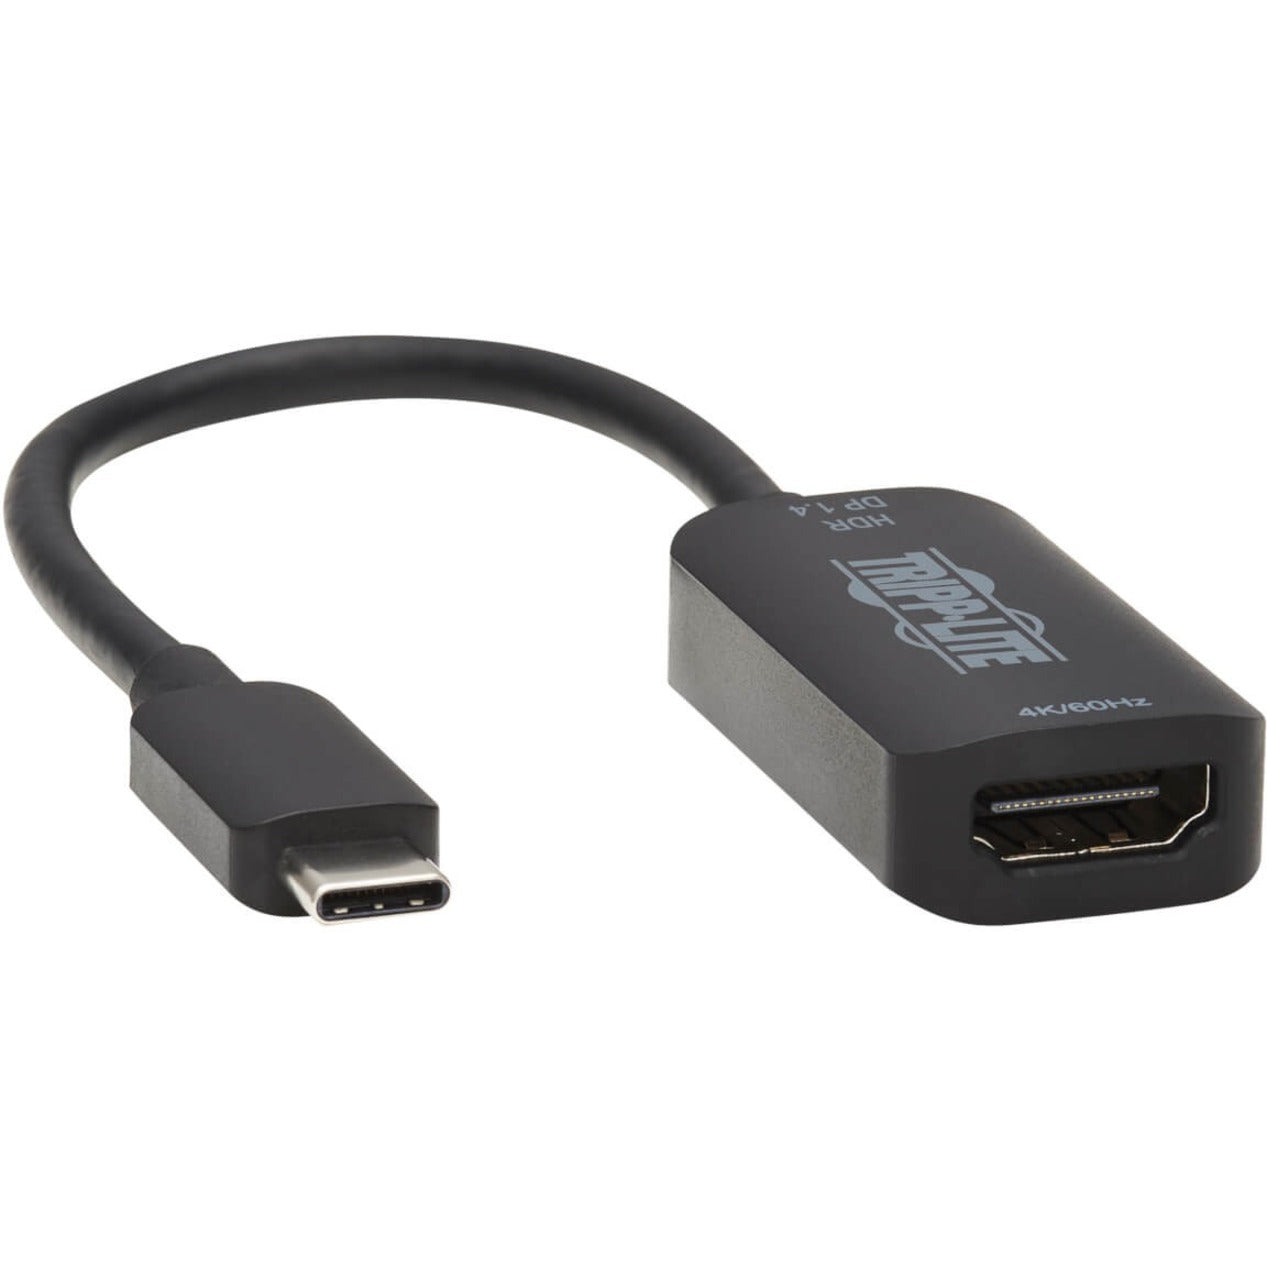 Tripp Lite U444-06N-HDR4-B USB-C to HDMI Adapter, 4K 60Hz, HDR, DP 1.4 Alt Mode, HDCP 2.2